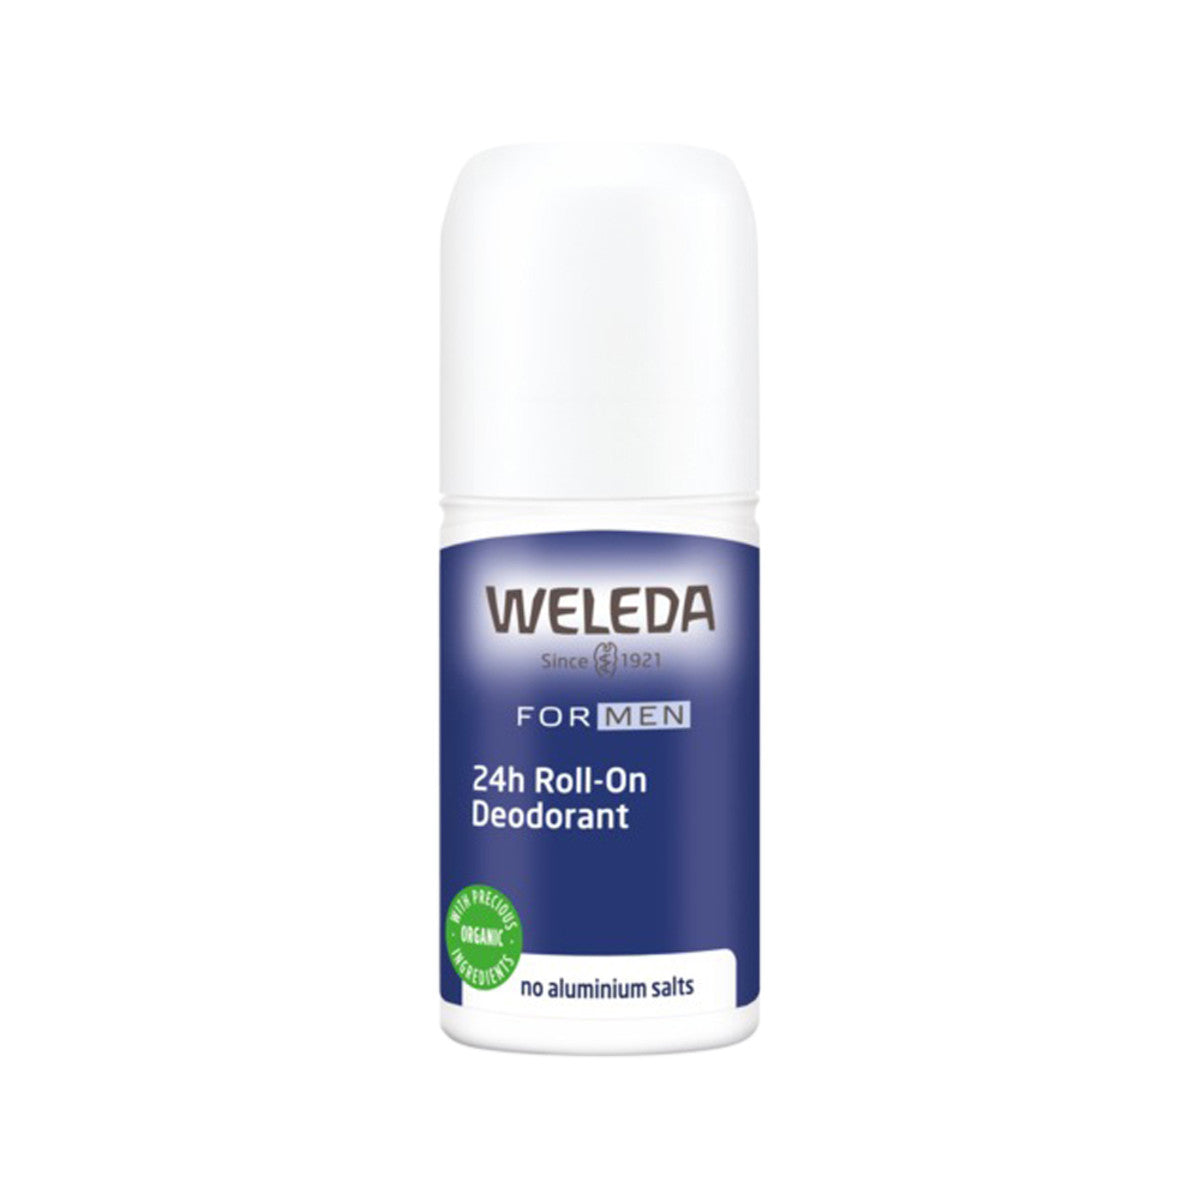 Weleda - For Men 24h Roll On Deodorant